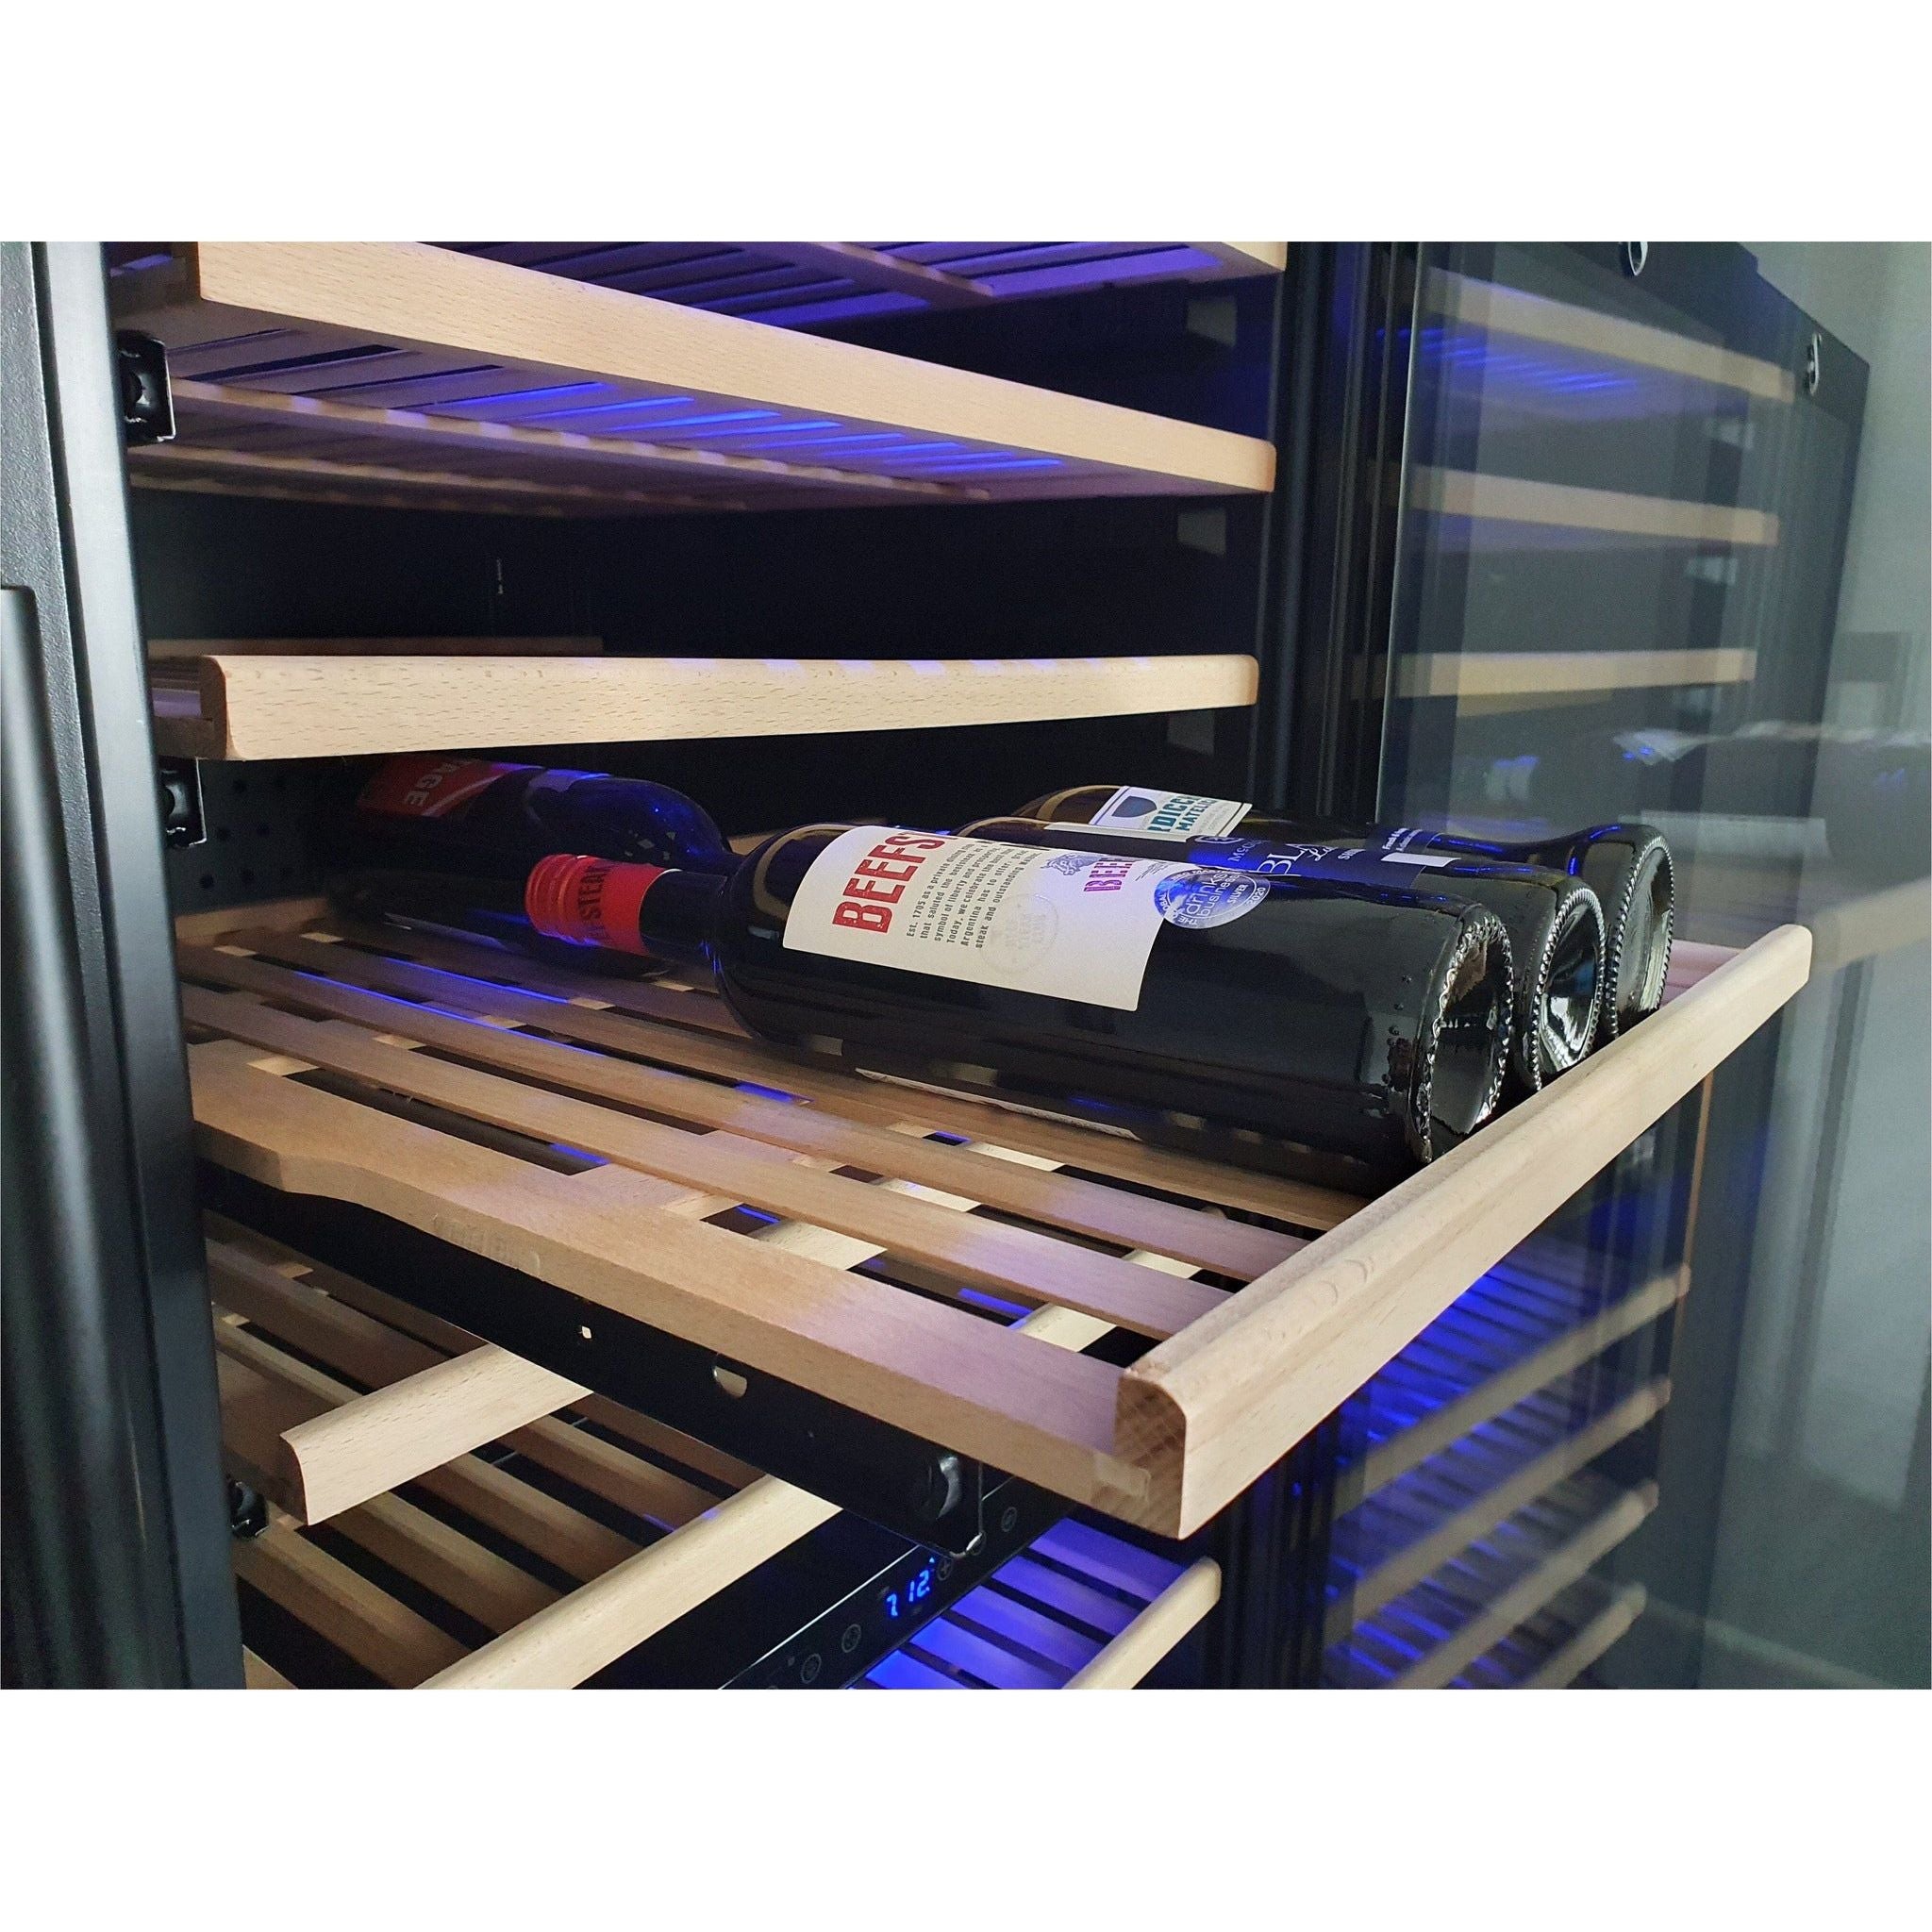 Dunavox GRANDE-181 - 655mm Width - Dual Zone 181 Bottle - Built In / Freestanding Wine Cooler - DX-181.490SDSK